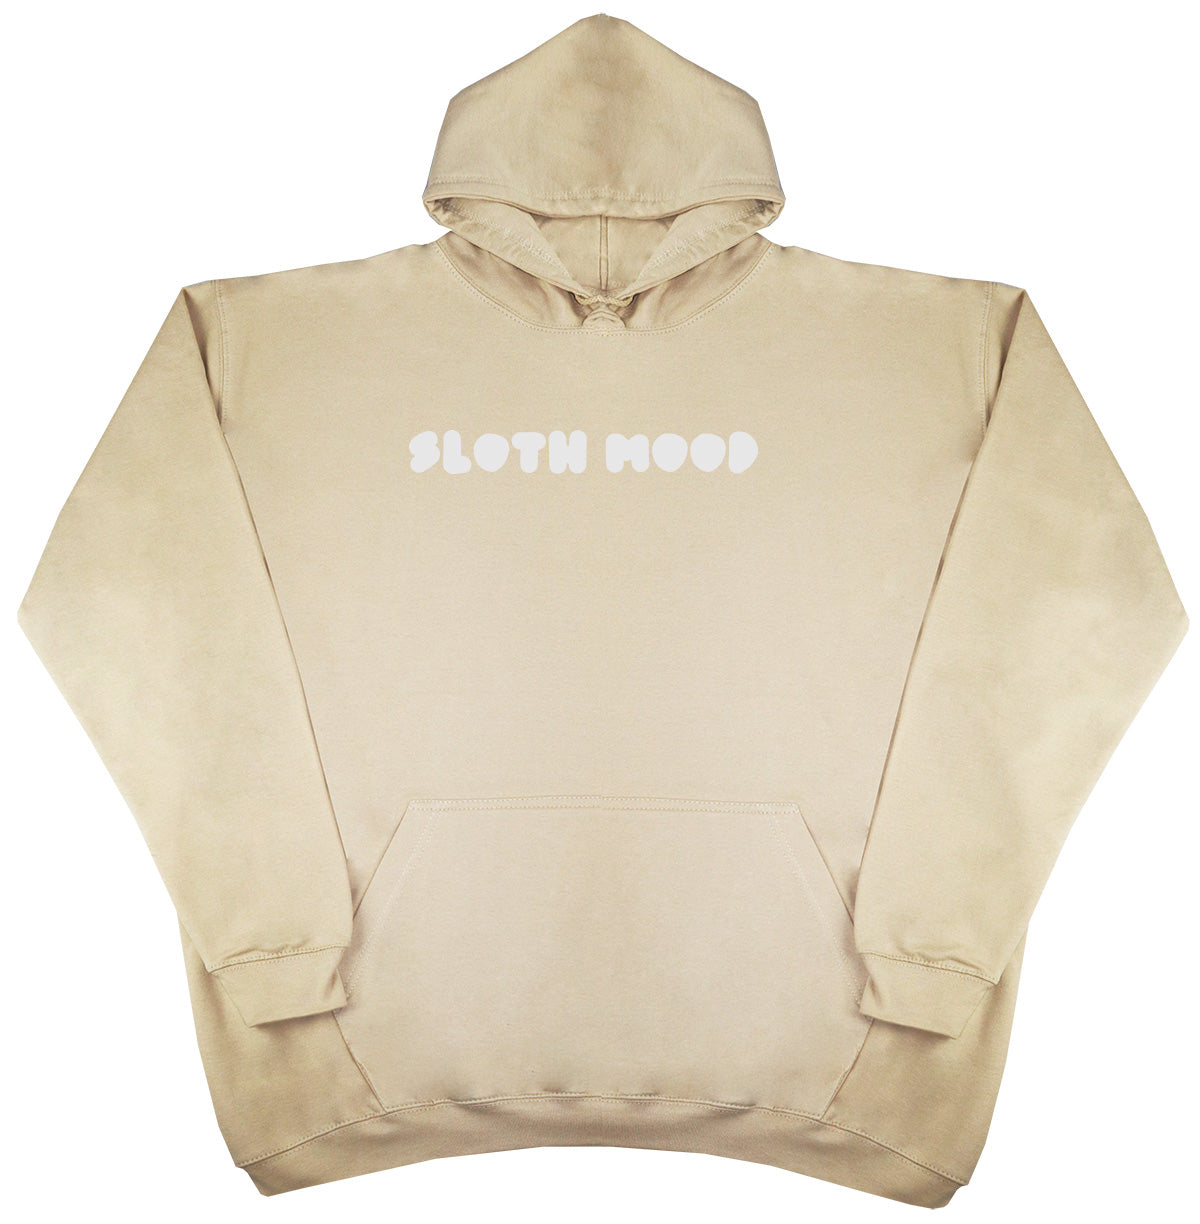 Sloth Mood - Huge Oversized Comfy Original Hoody